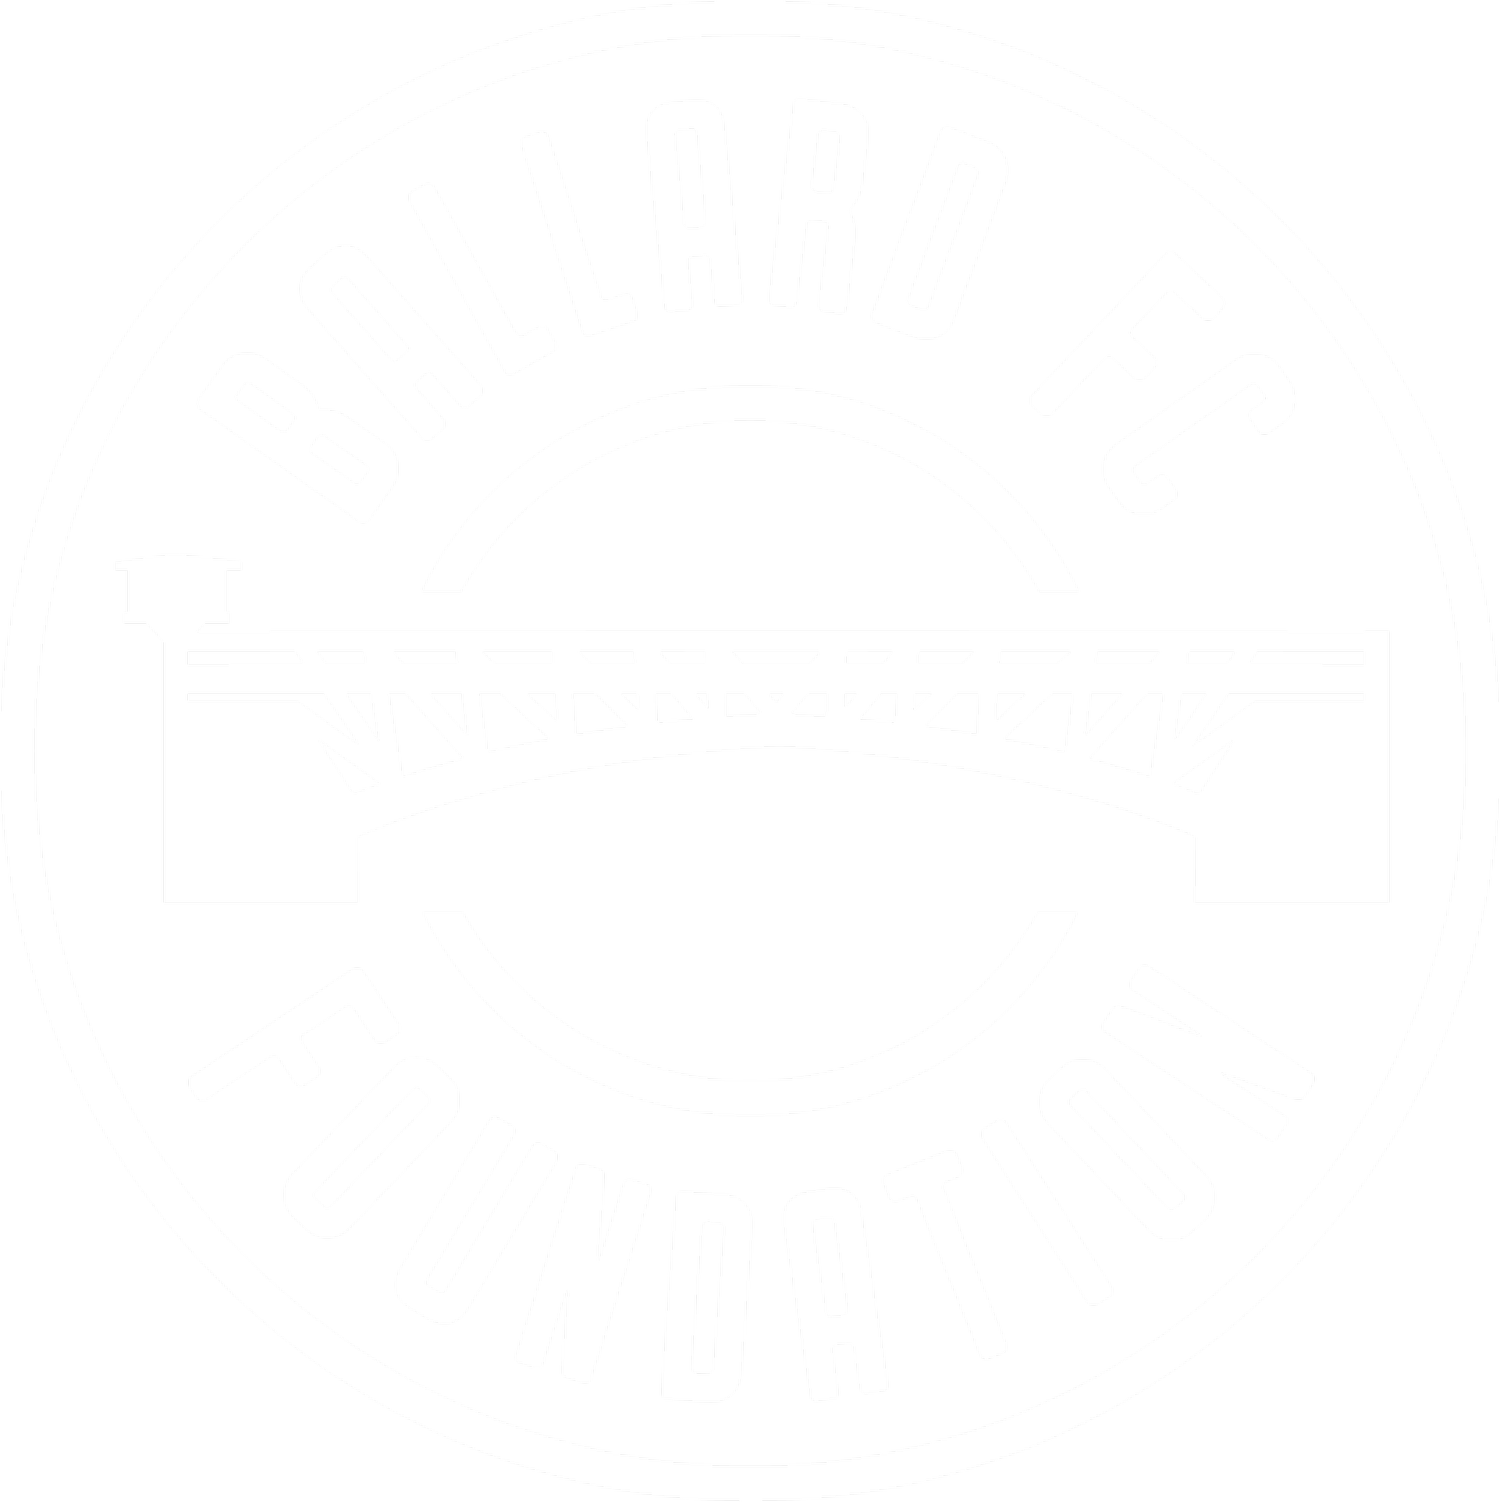 Ballard FC Foundation